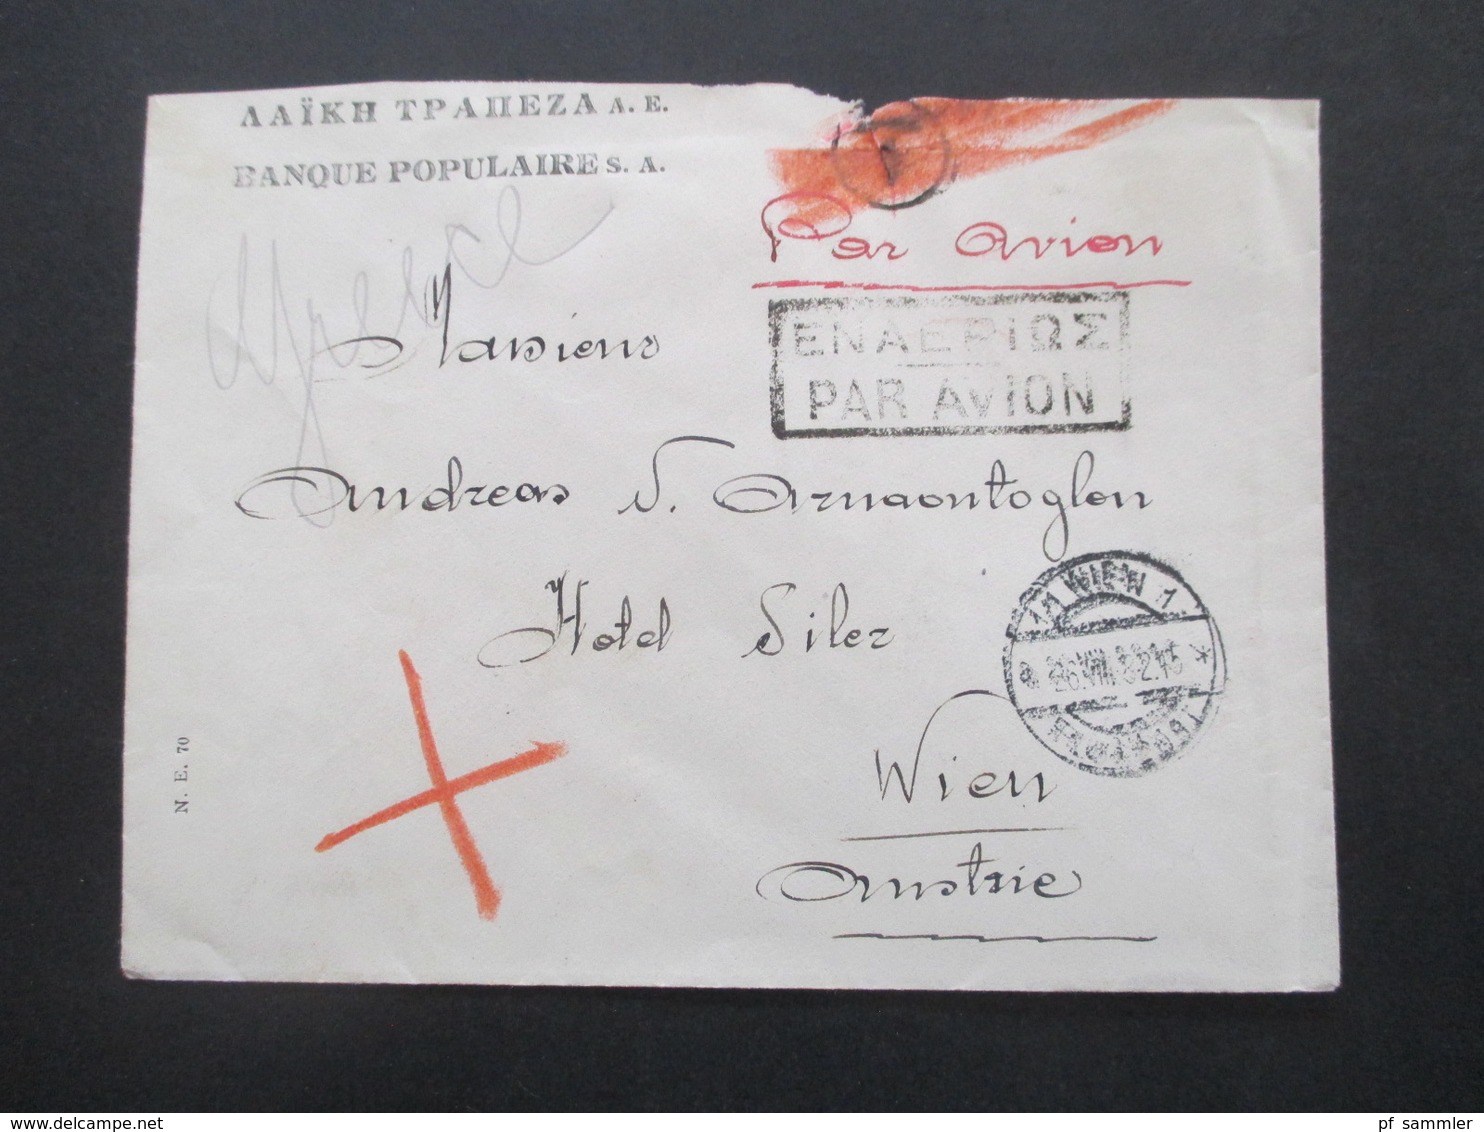 Griechenland 1932 Par Avion Luftpost Banque Populaires Nach Wien Mit Ank. Stempel Rücks. Nr. 350 (4) MeF - Covers & Documents